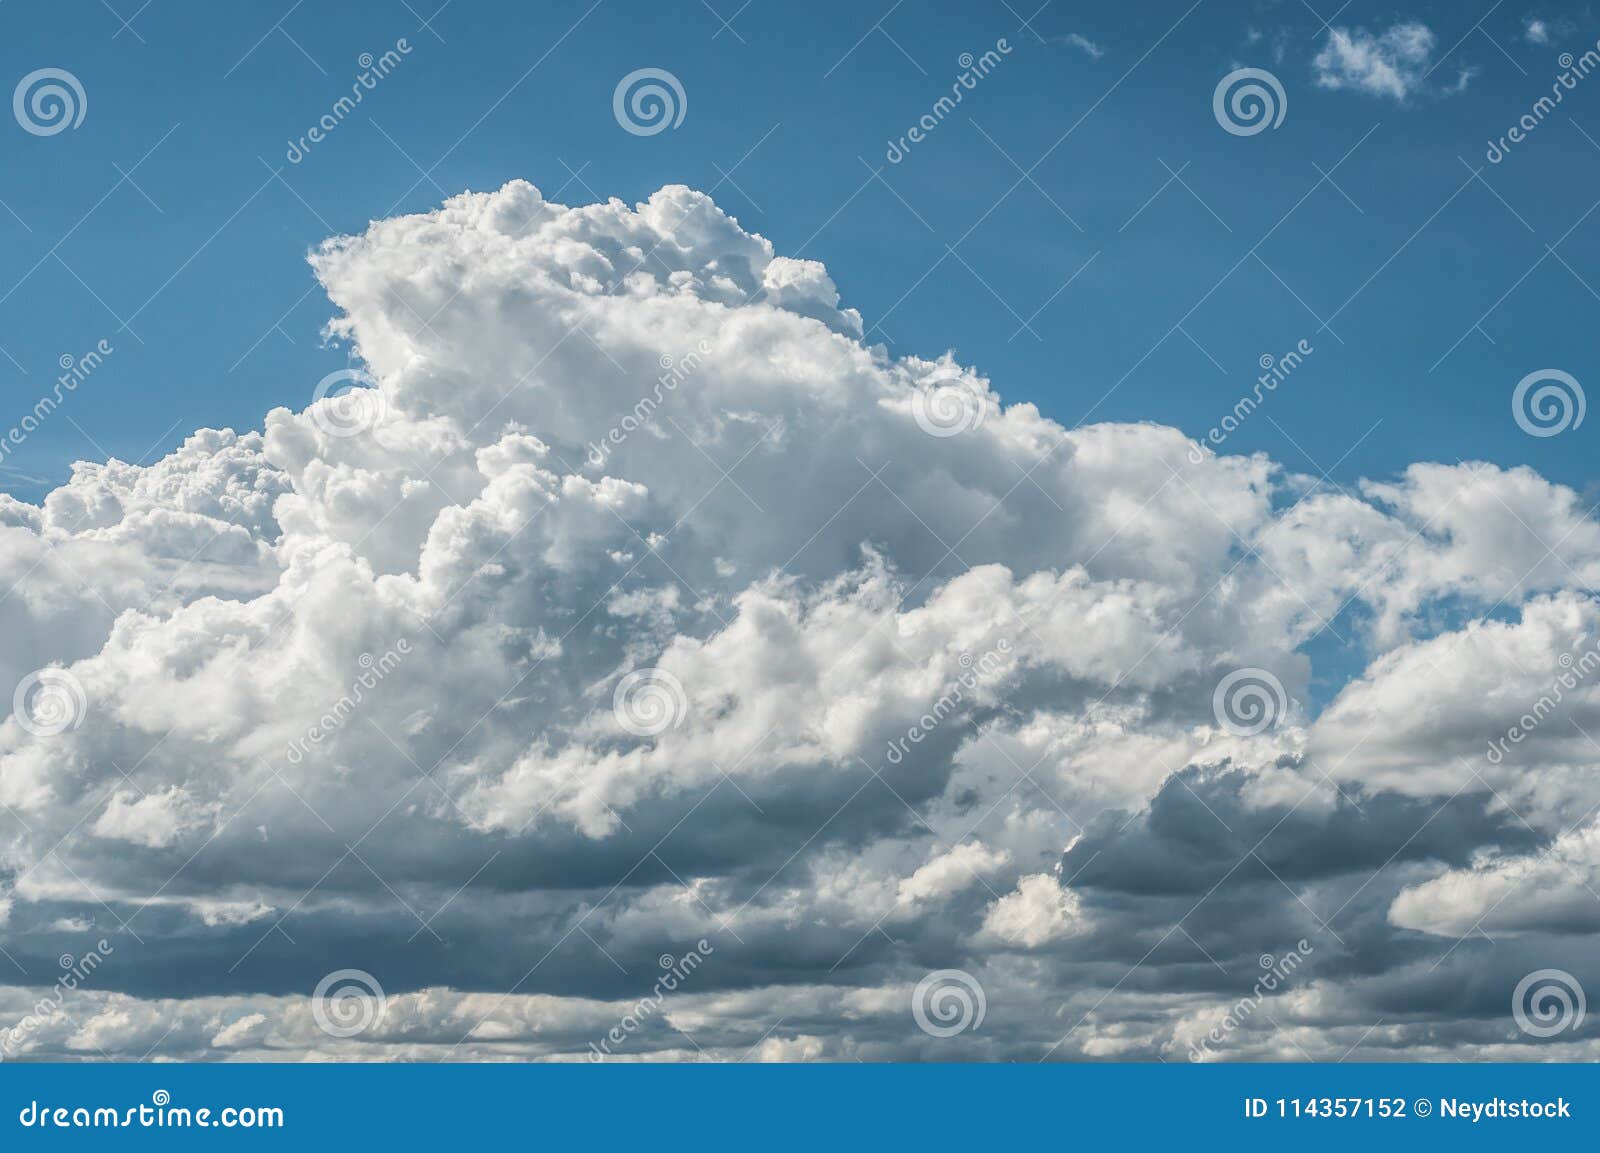 cloudy sky with cumulo nimbus clouds